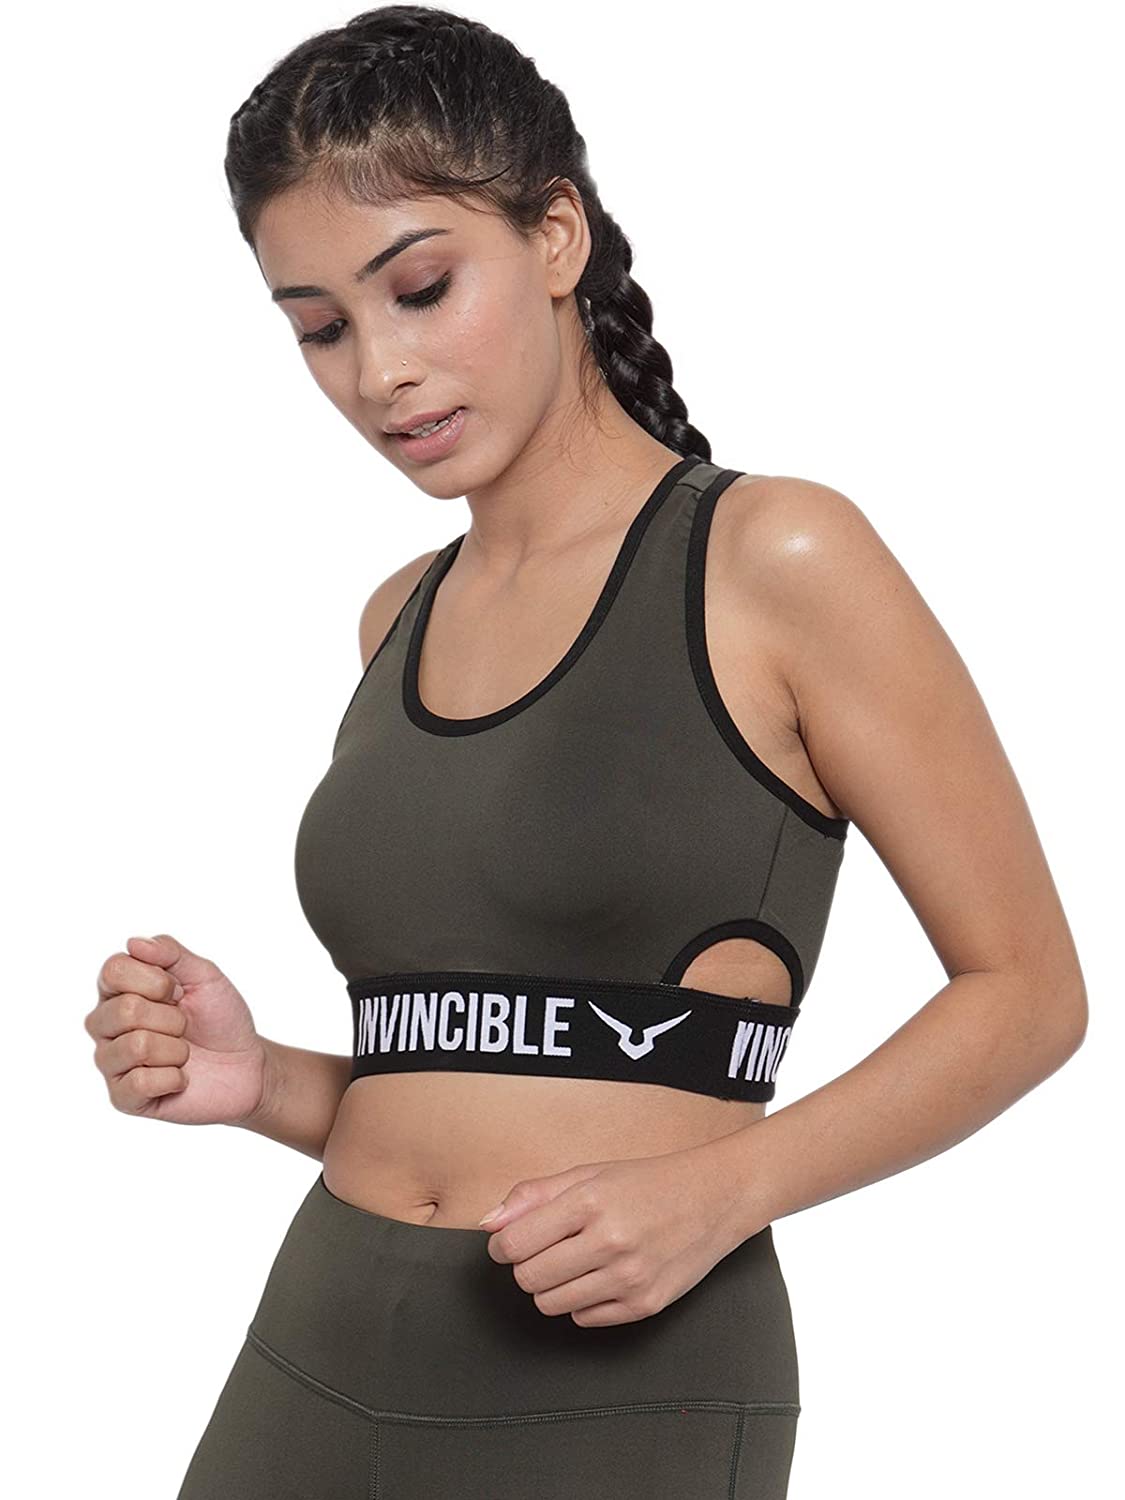 Invincible Women’s Functional Pocket Sports Bra